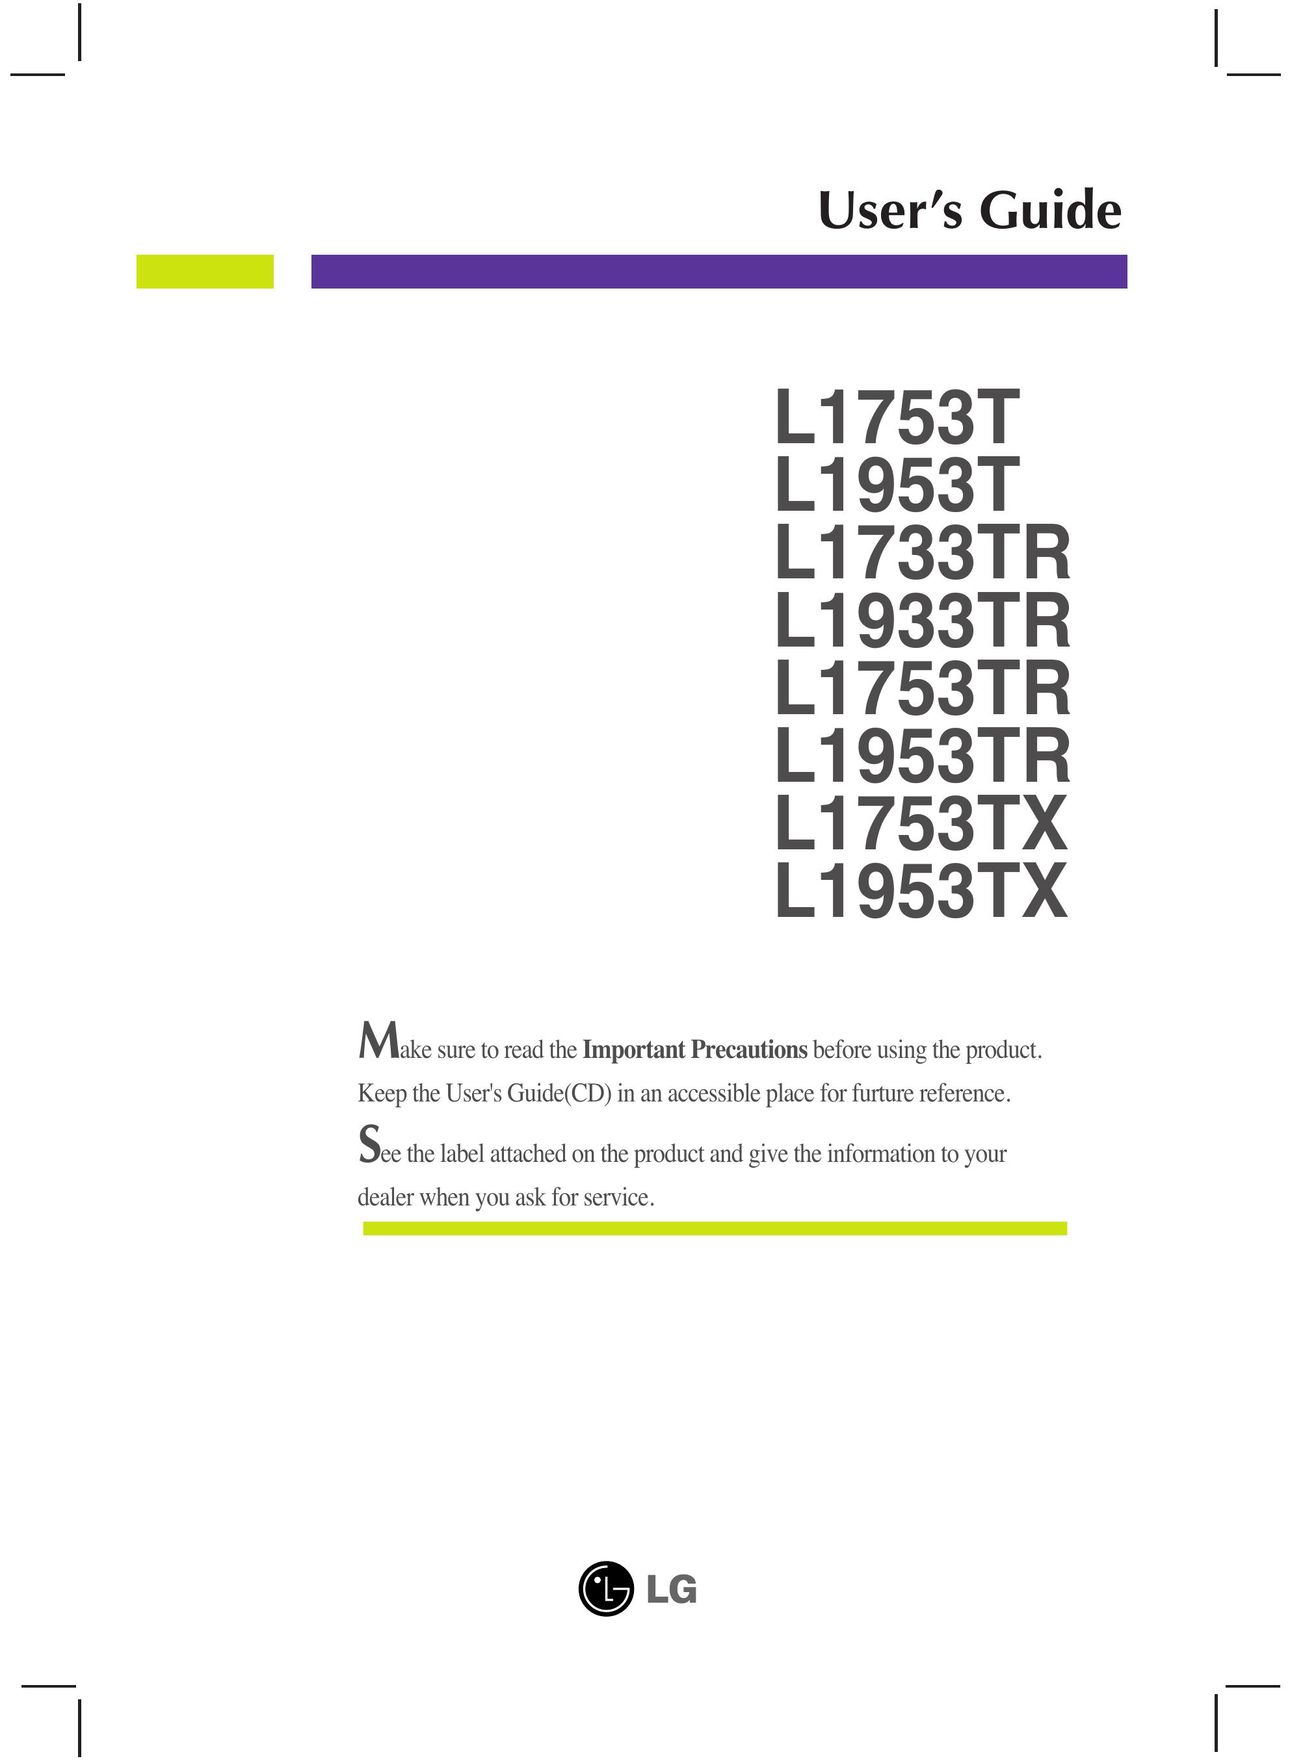 LG Electronics L1753T CD Player User Manual